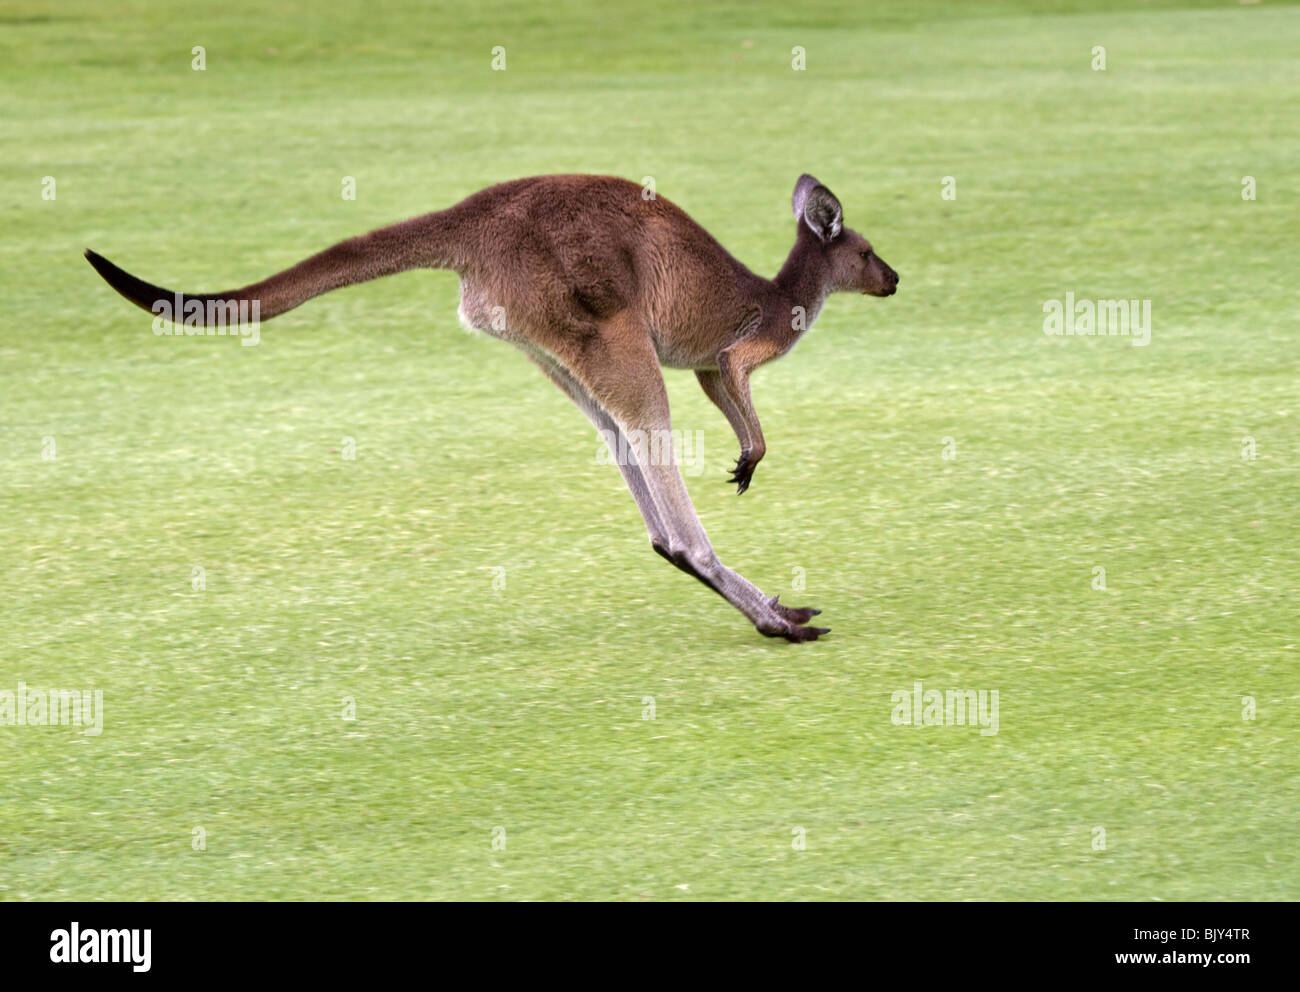 Western Grey Kangaroo, Macropus fuliginosus melanops, jumping across a grassy field Stock Photo